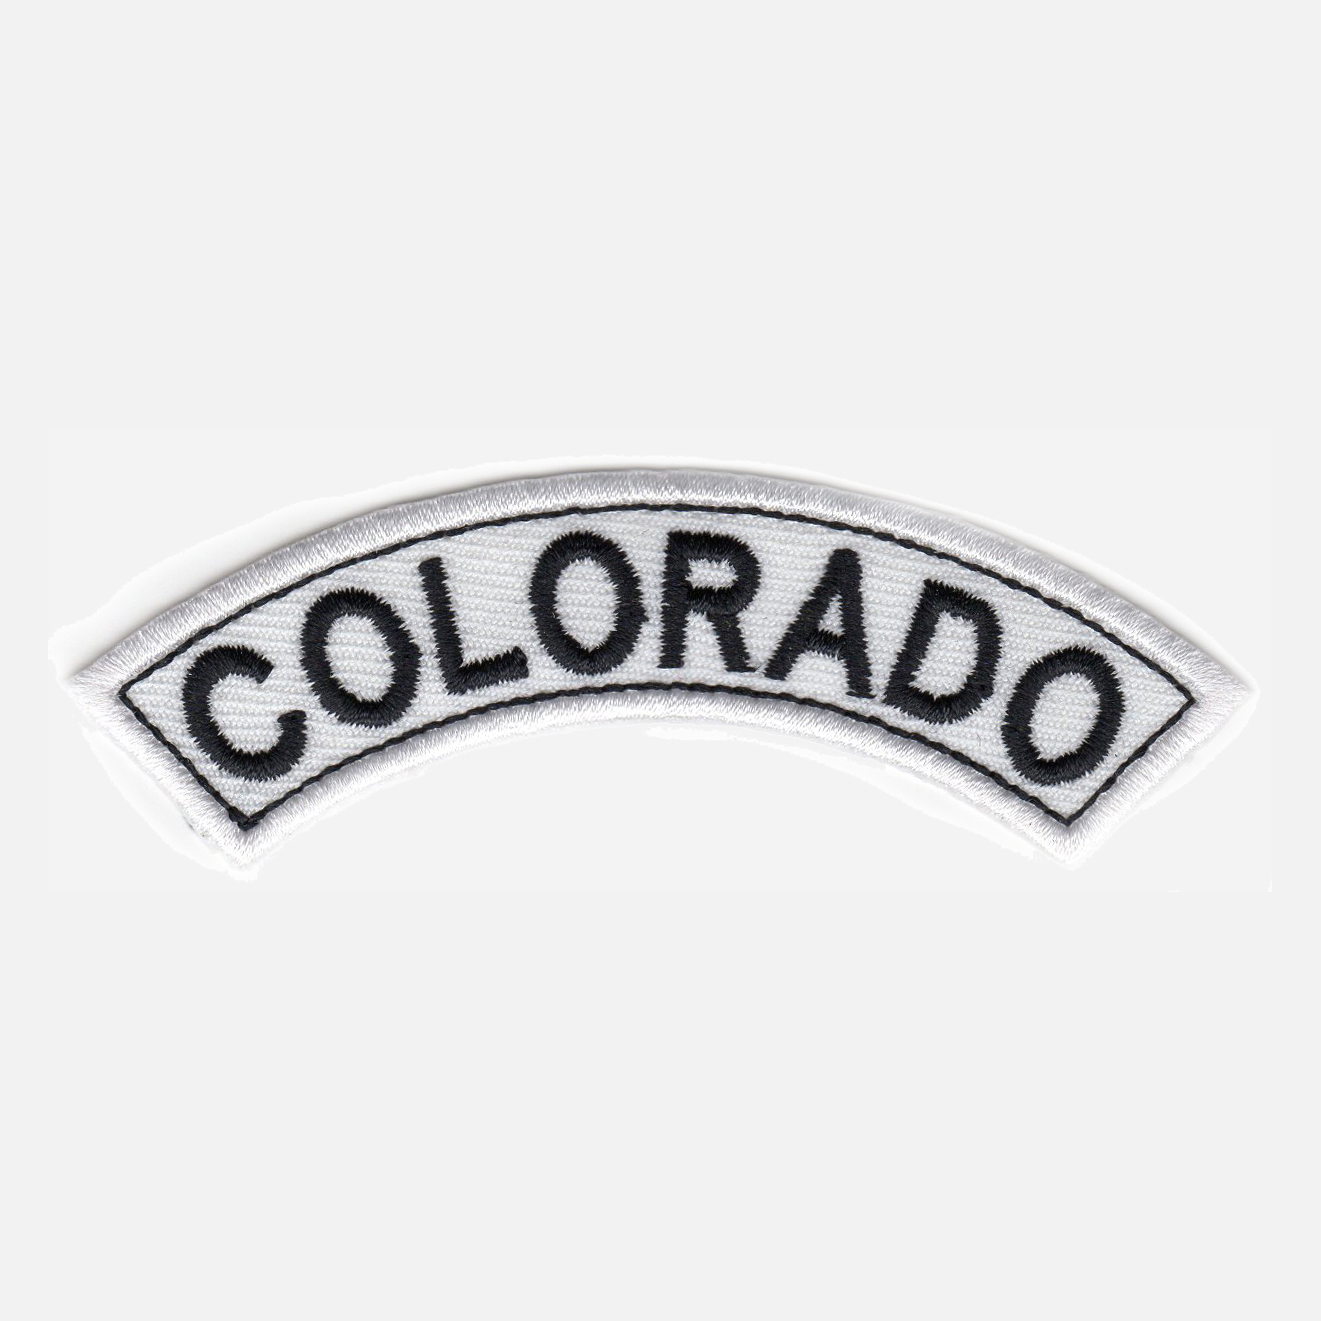 Colorado Mini Top Rocker Embroidered Vest Patch